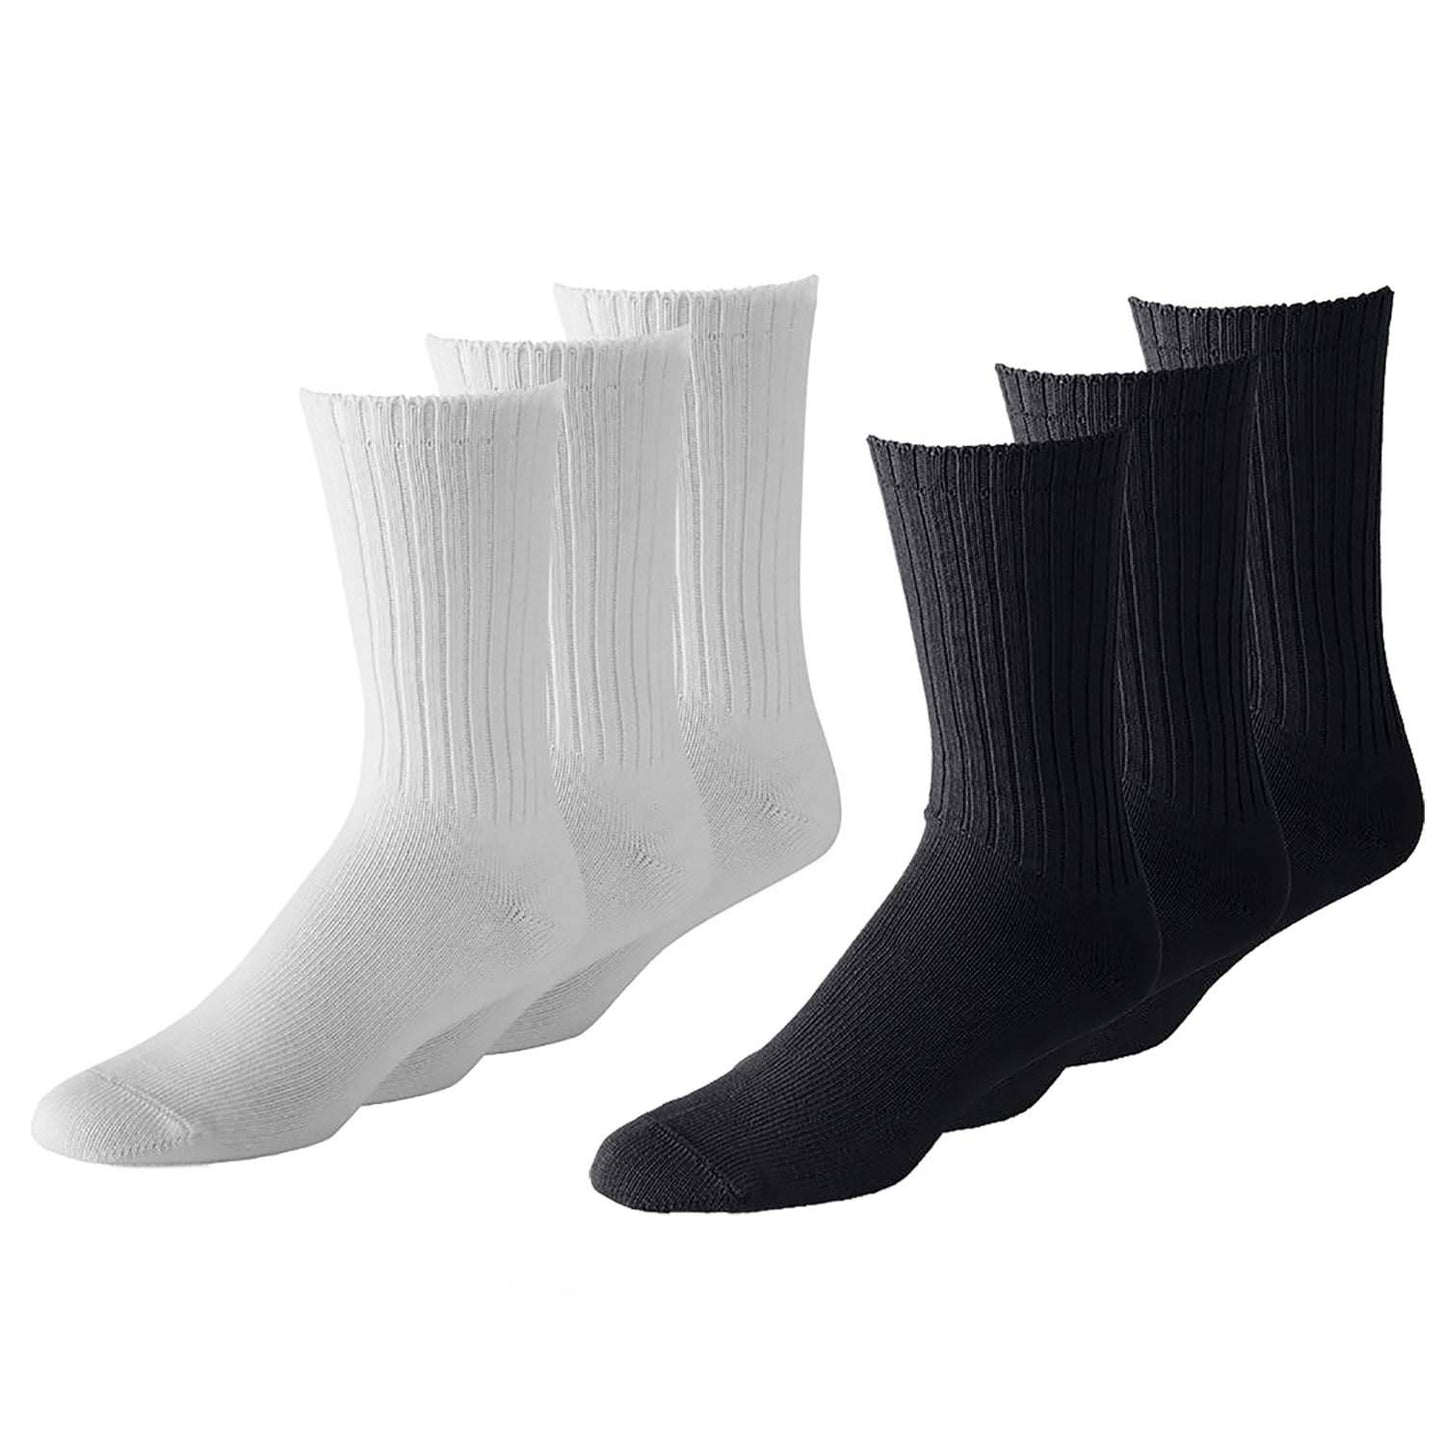 180 Pairs Men's Athletic Crew Socks - Bulk Wholesale Packs - Any Shoe Size